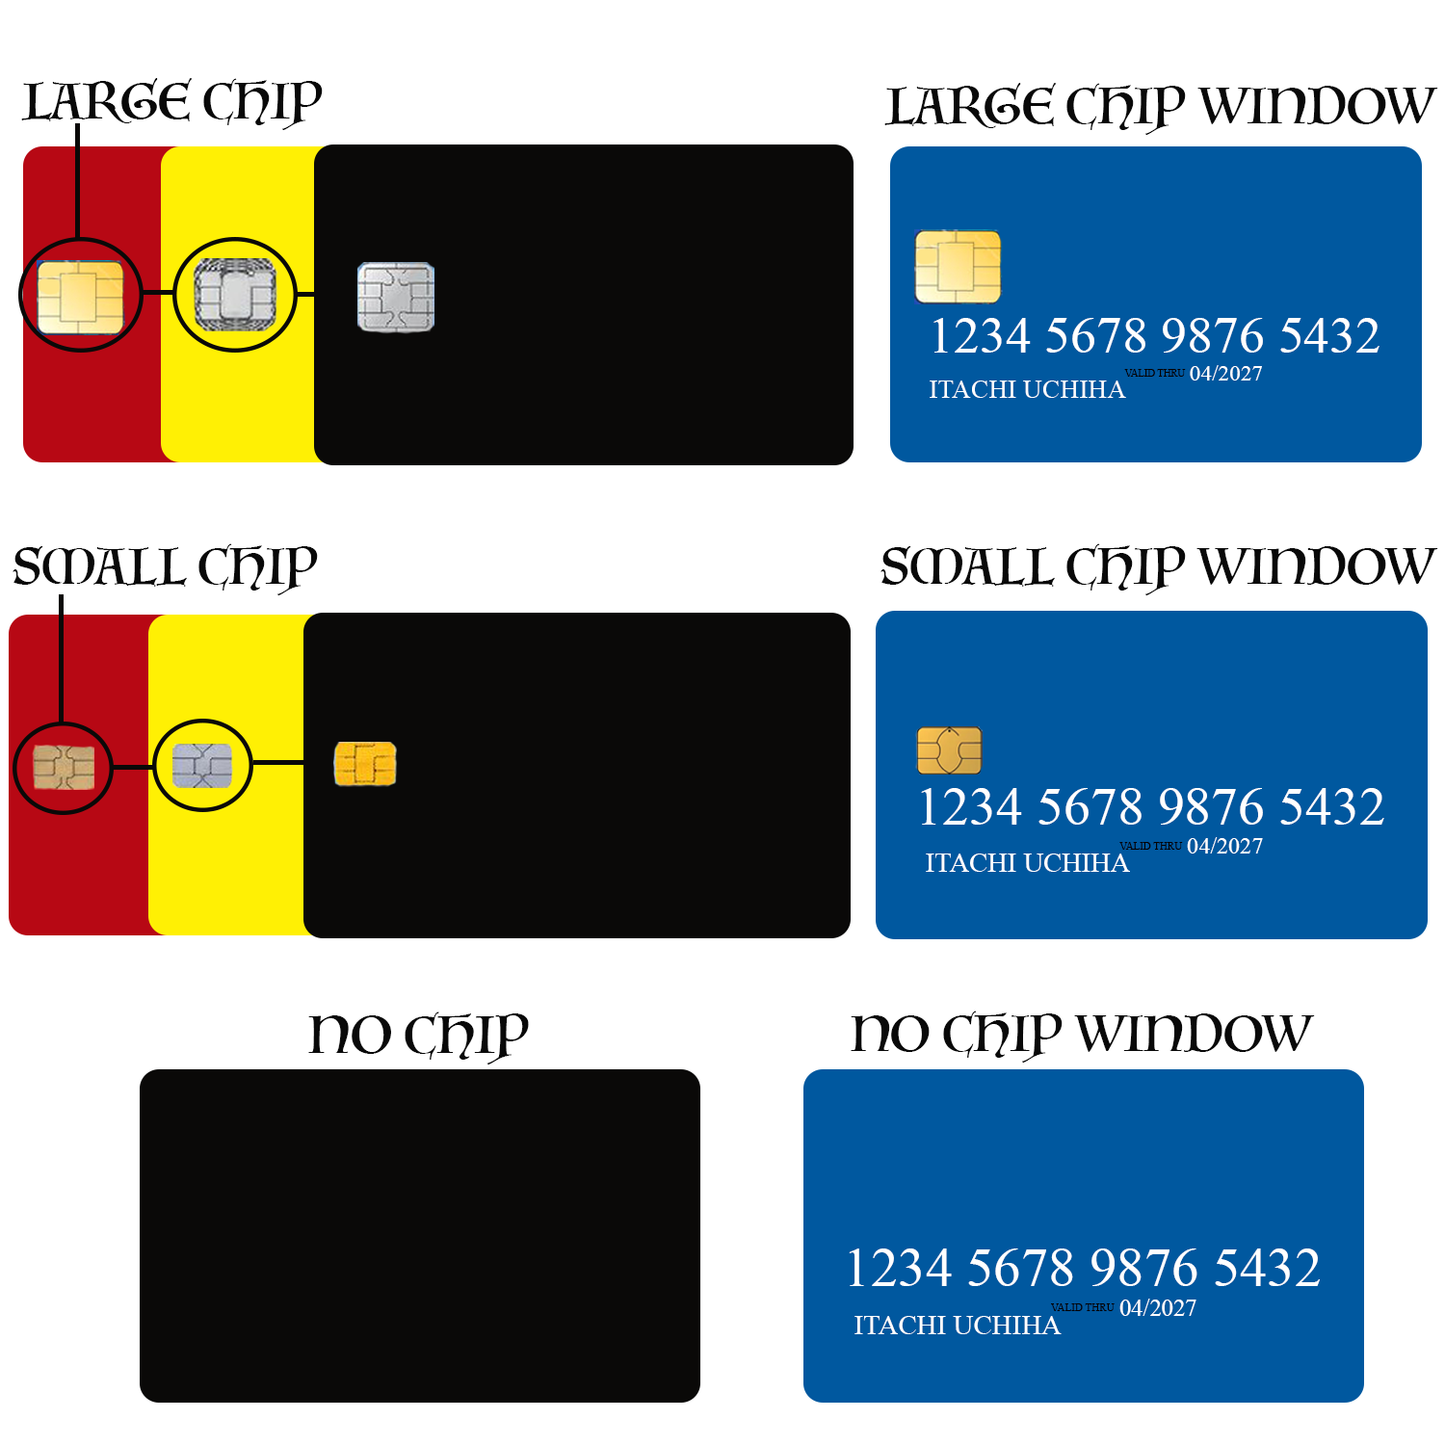 YuGiOh IP Masquerena Credit Card Sticker (Please Read Description)